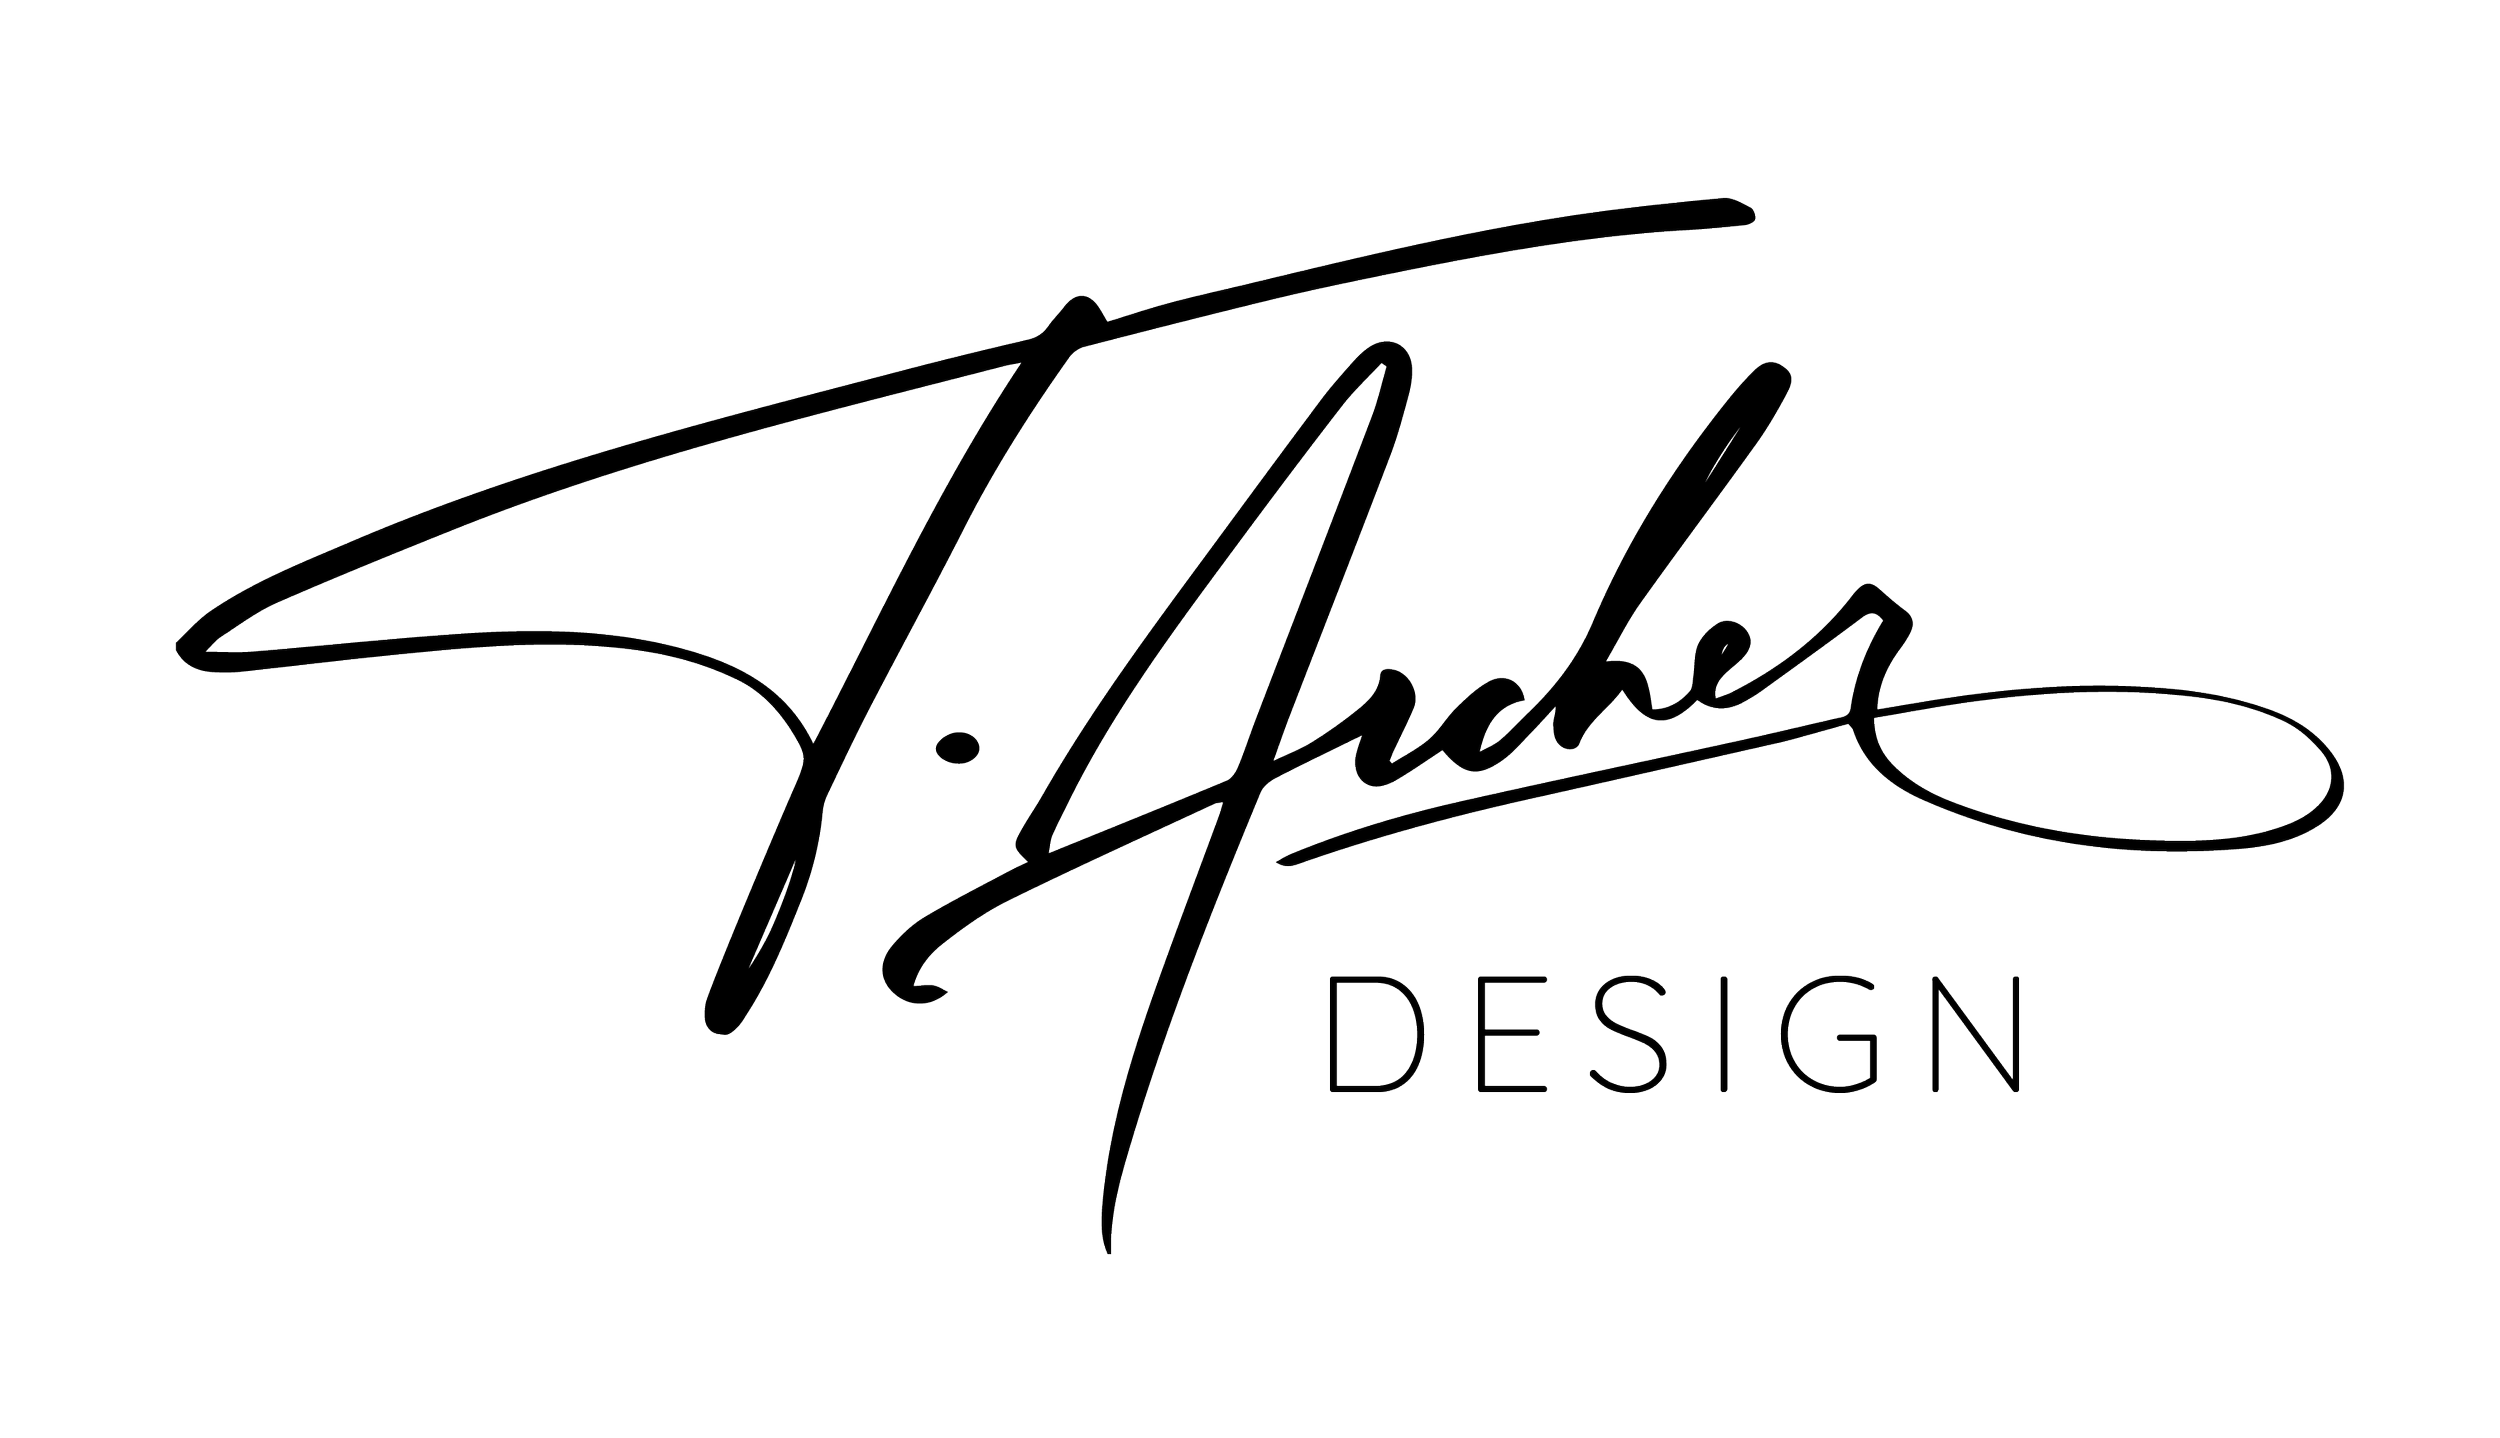 T. Archer Design